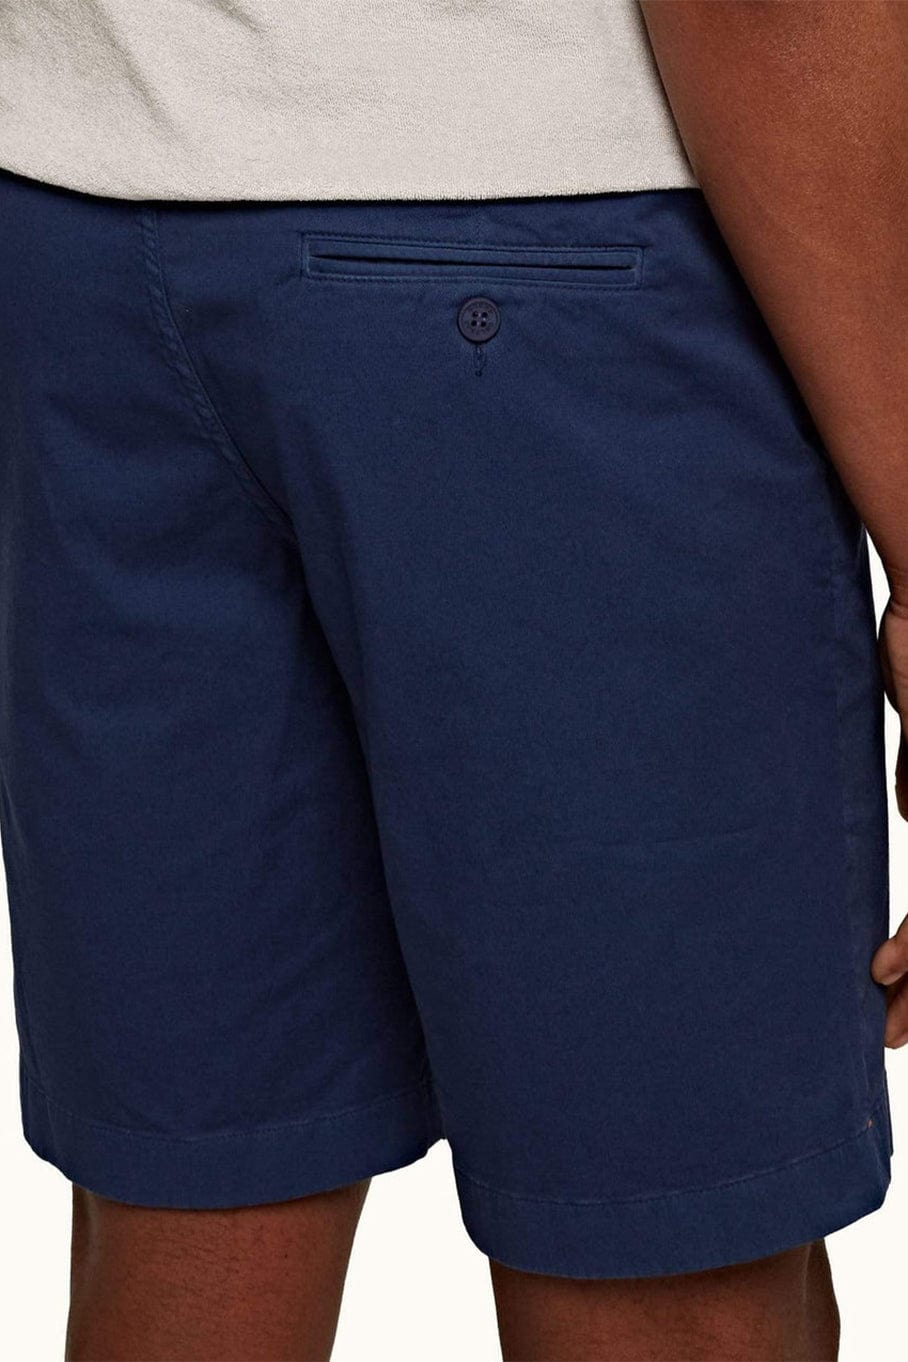 ORLEBAR BROWN-Blue Wash Longest-Length Dane Cotton Twill Shorts-